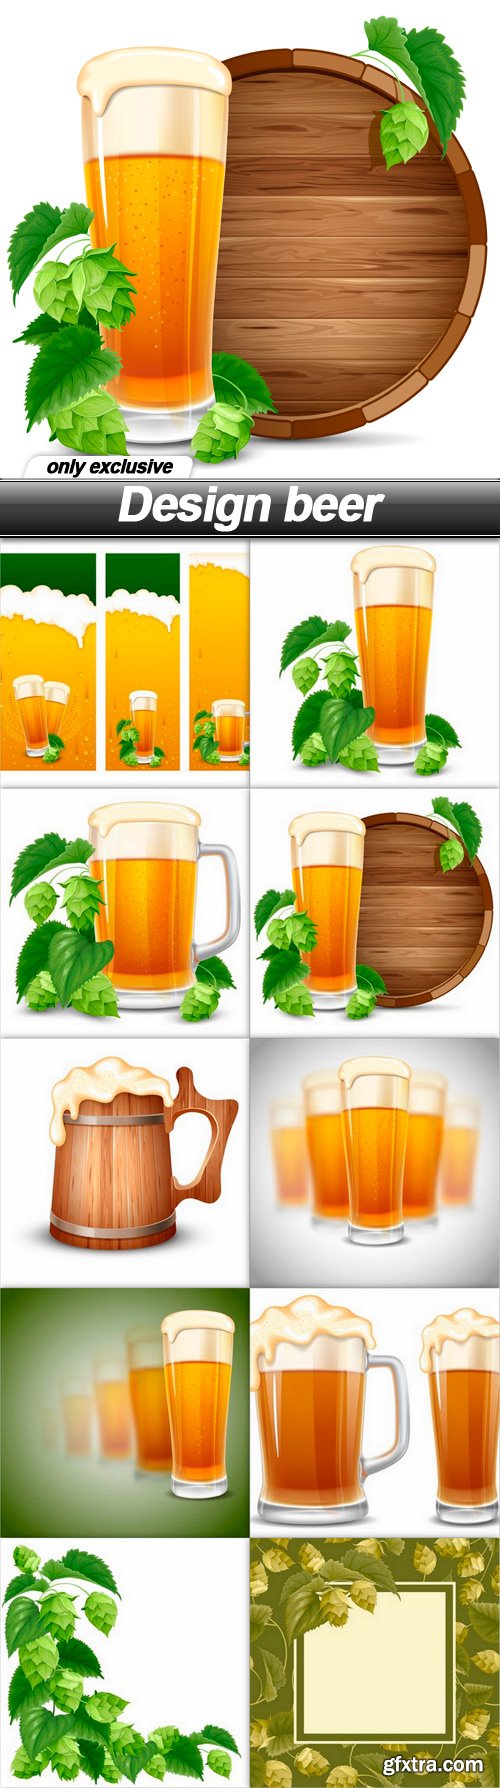 Design beer - 10 EPS